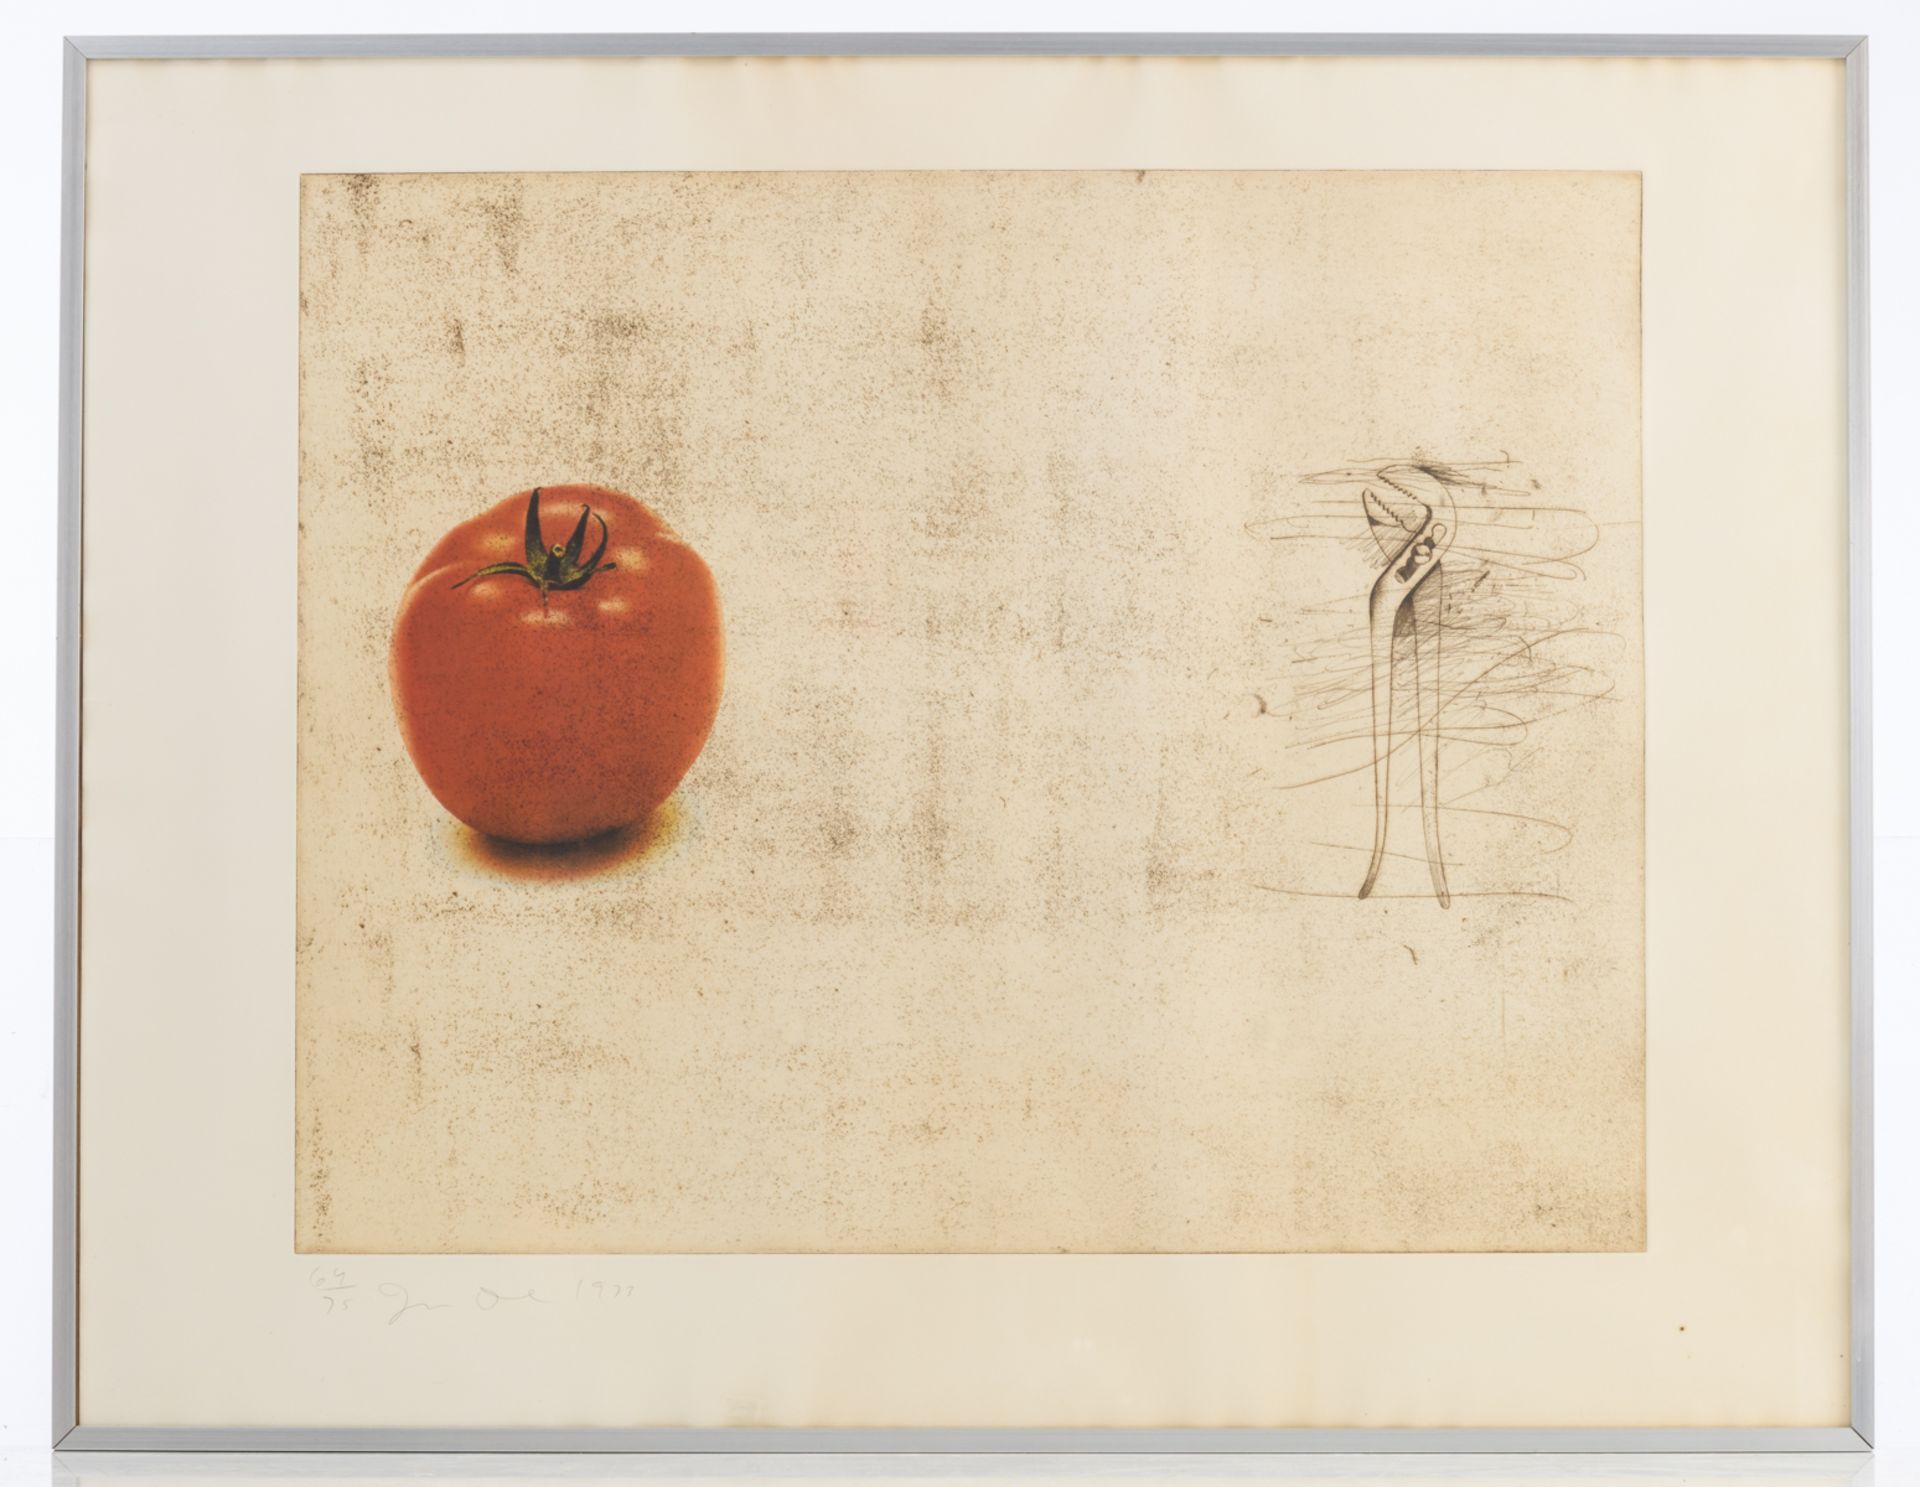 Dine J., 'Tomato', dated 1973, etching and offset, N° 64/75, 60 x 75 cm - Bild 2 aus 5